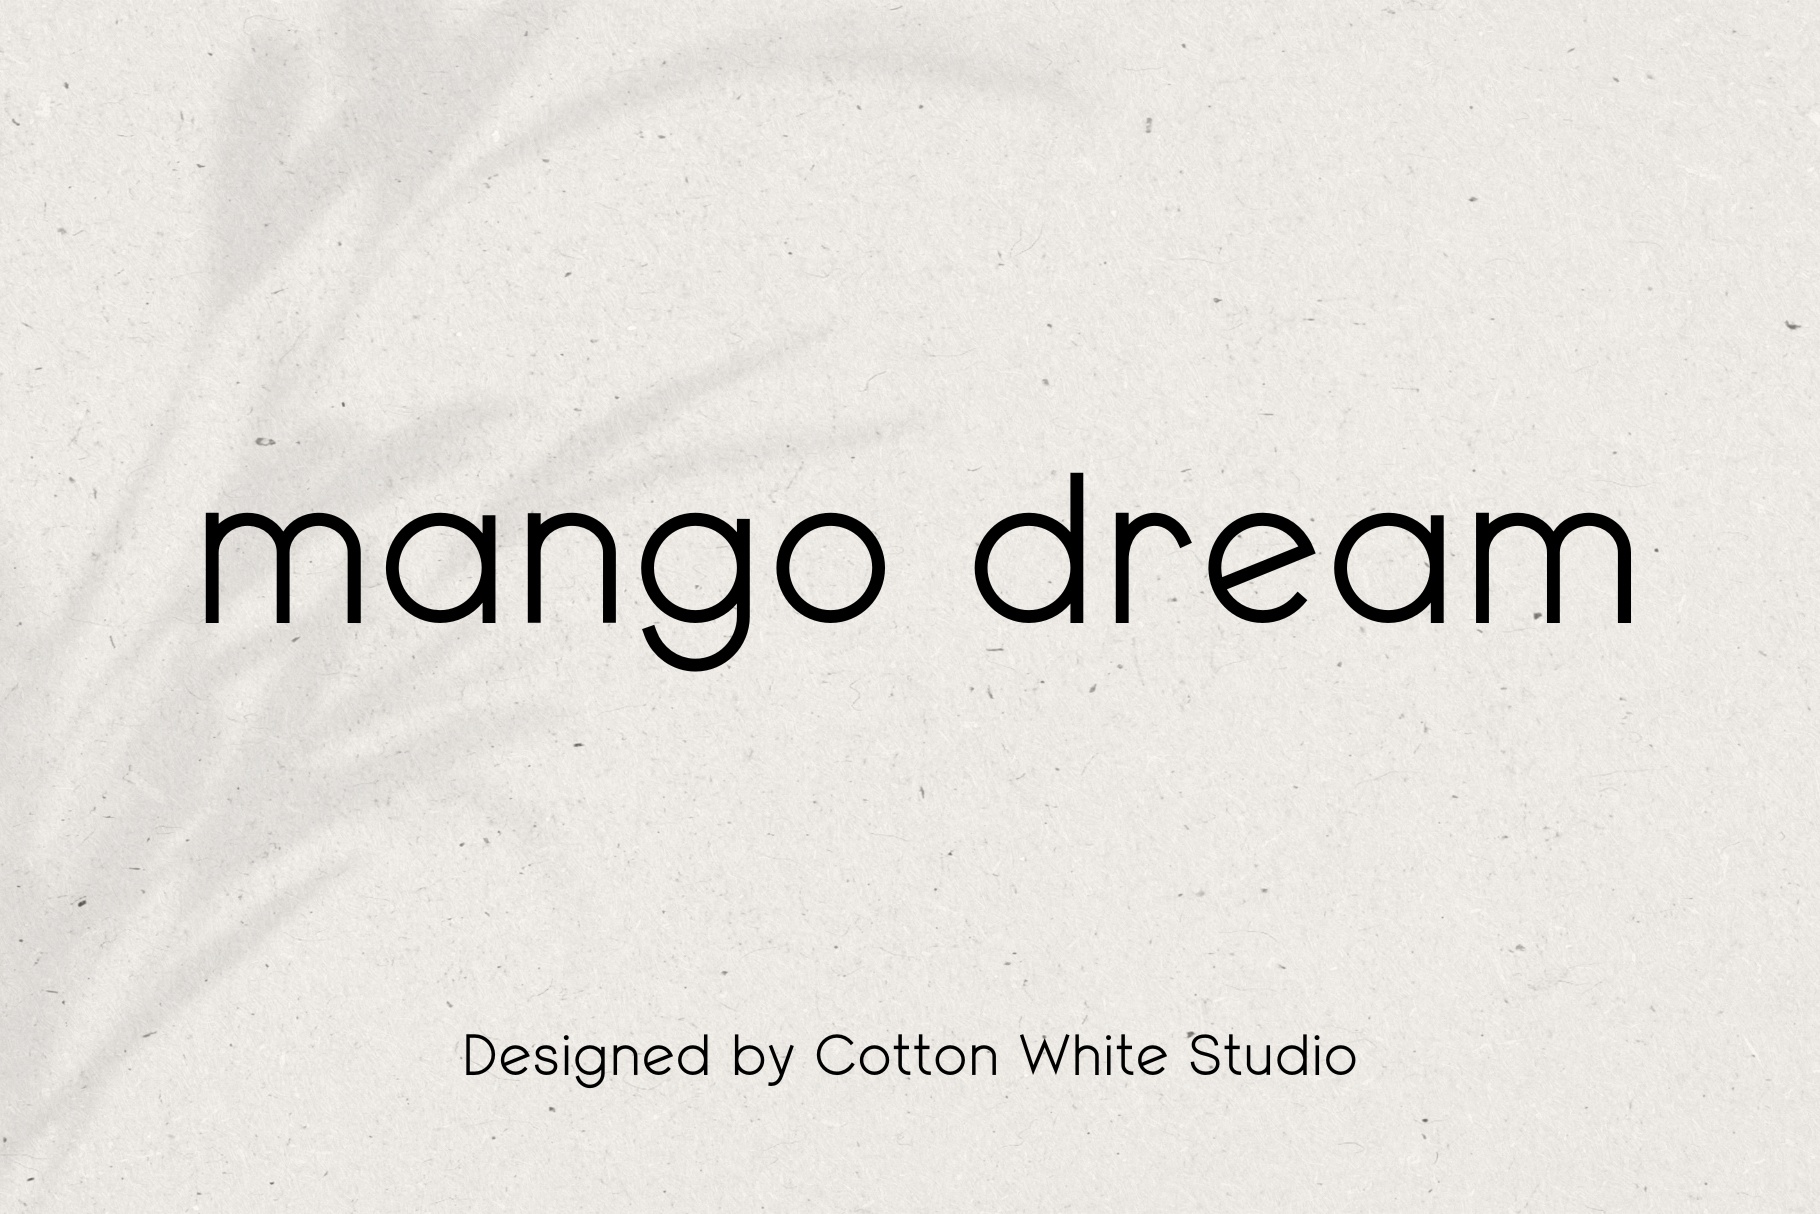 Mango Dream